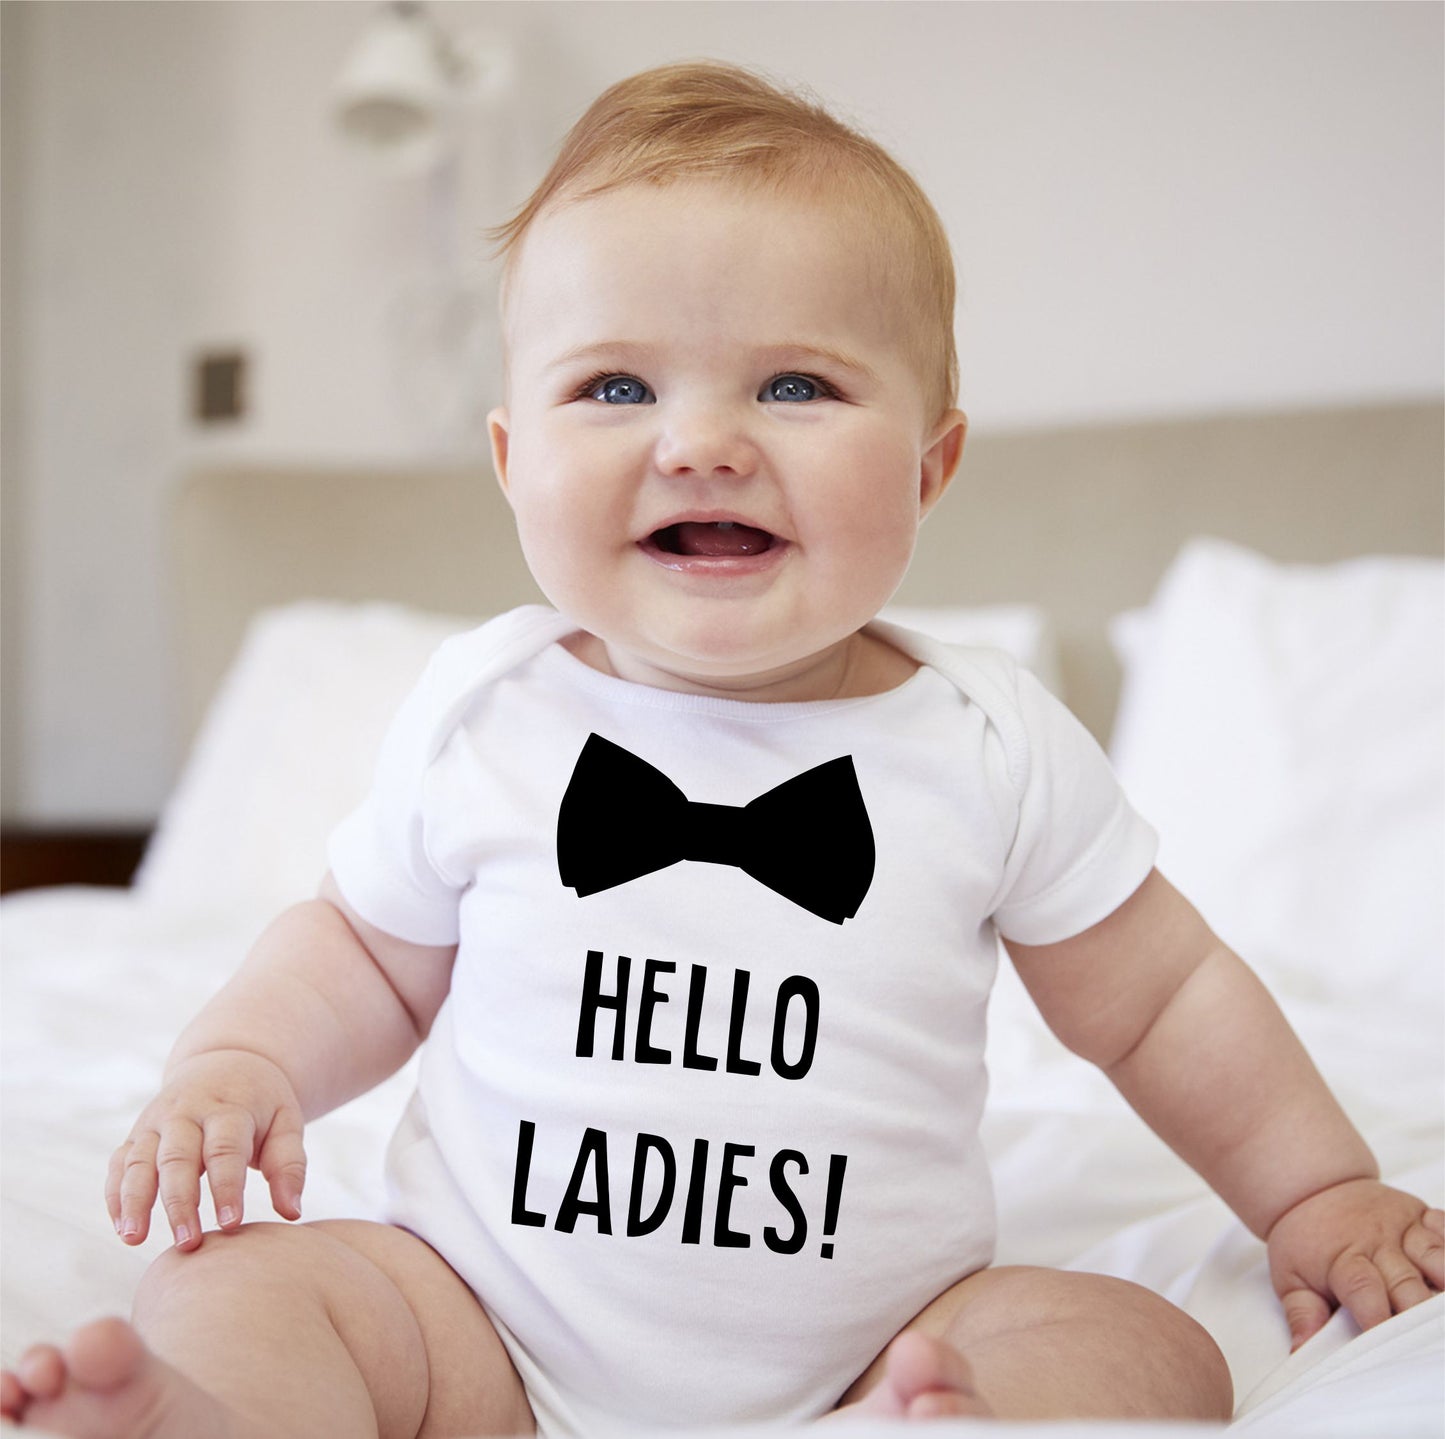 Baby Statement Onesies - Bowtie Hello Ladies